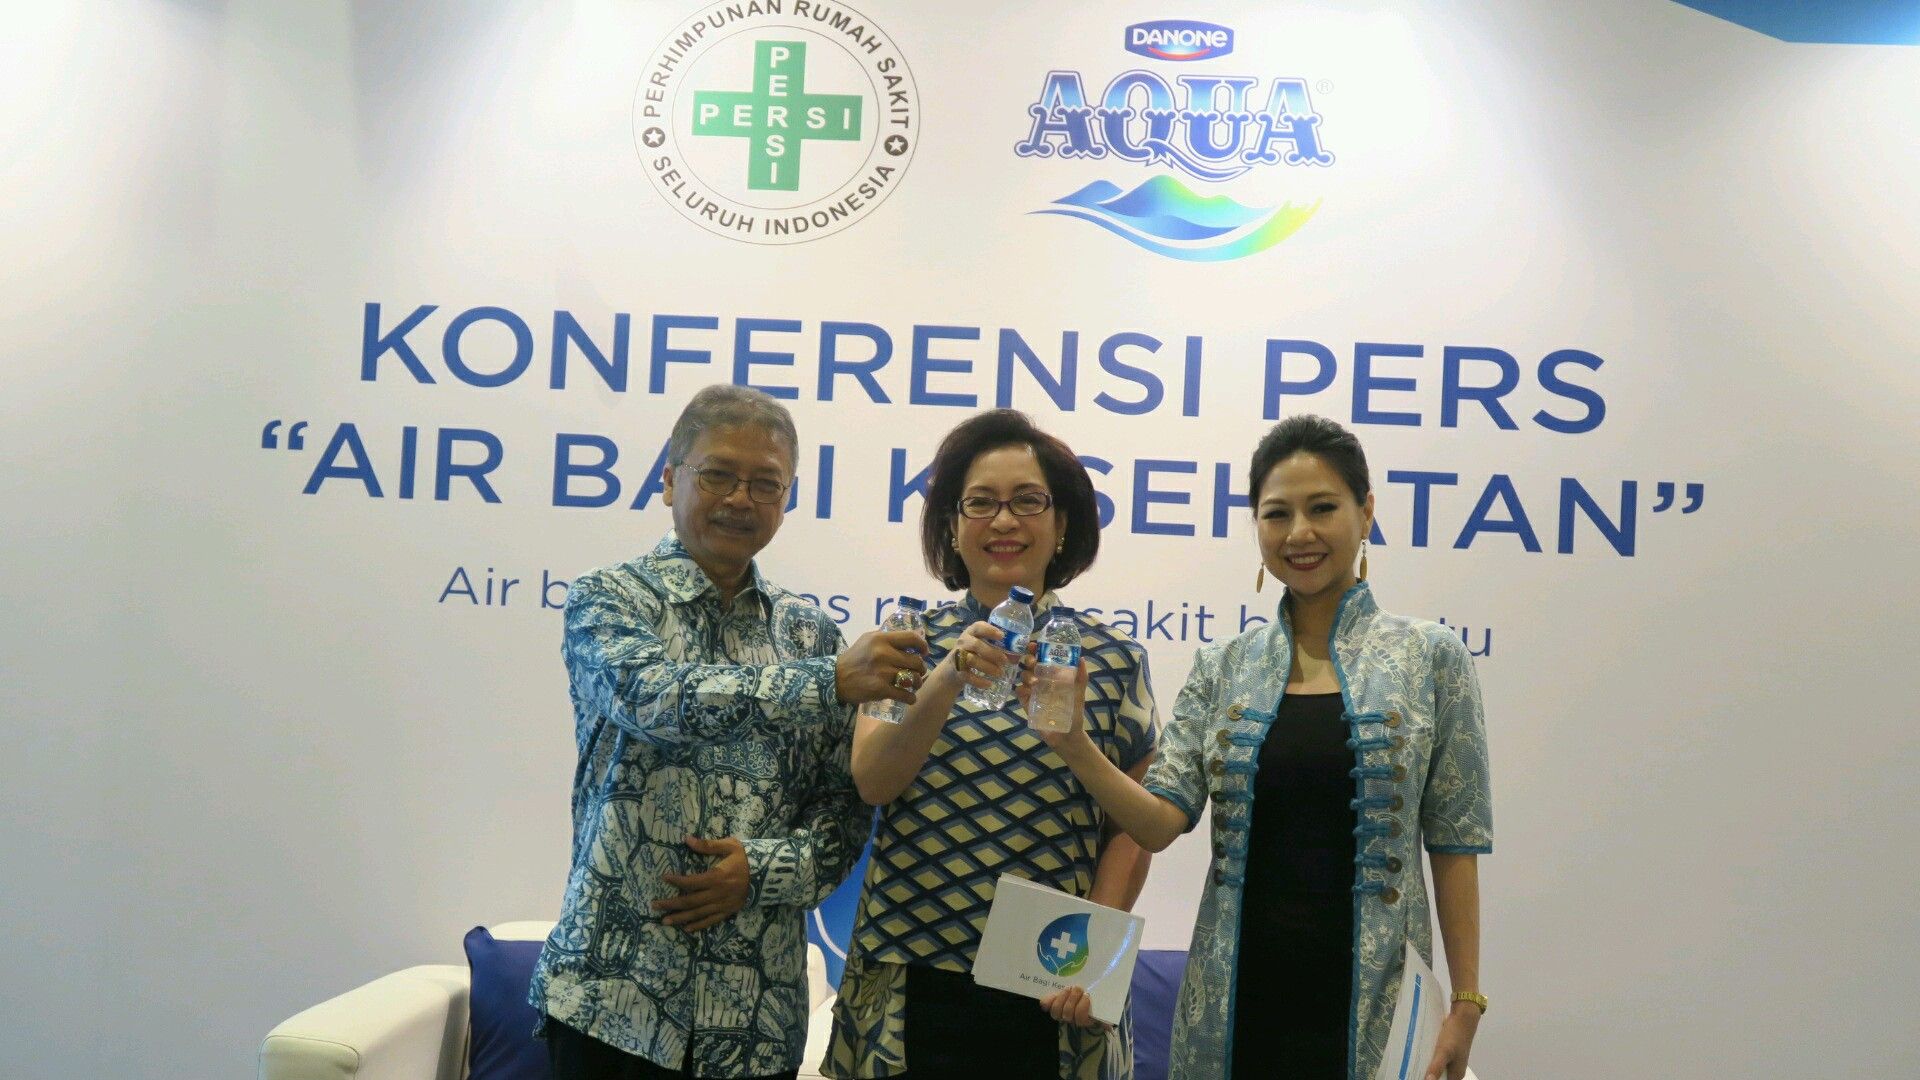 PERSI dan Danone Berkolaborasi Sediakan Air Bersih di Rumah Sakit